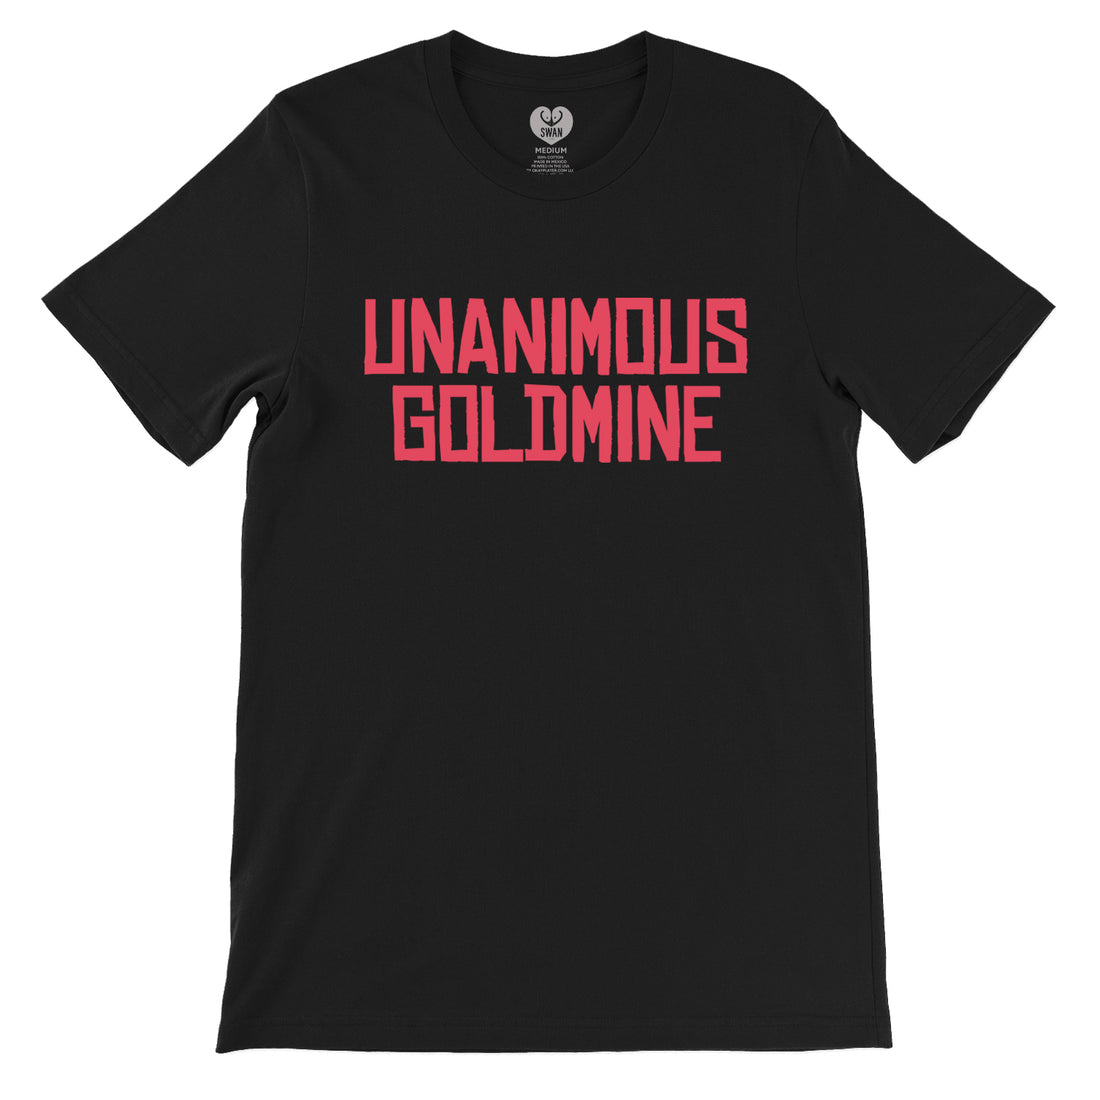 Neptune Frost Unanimous Goldmine T-Shirt